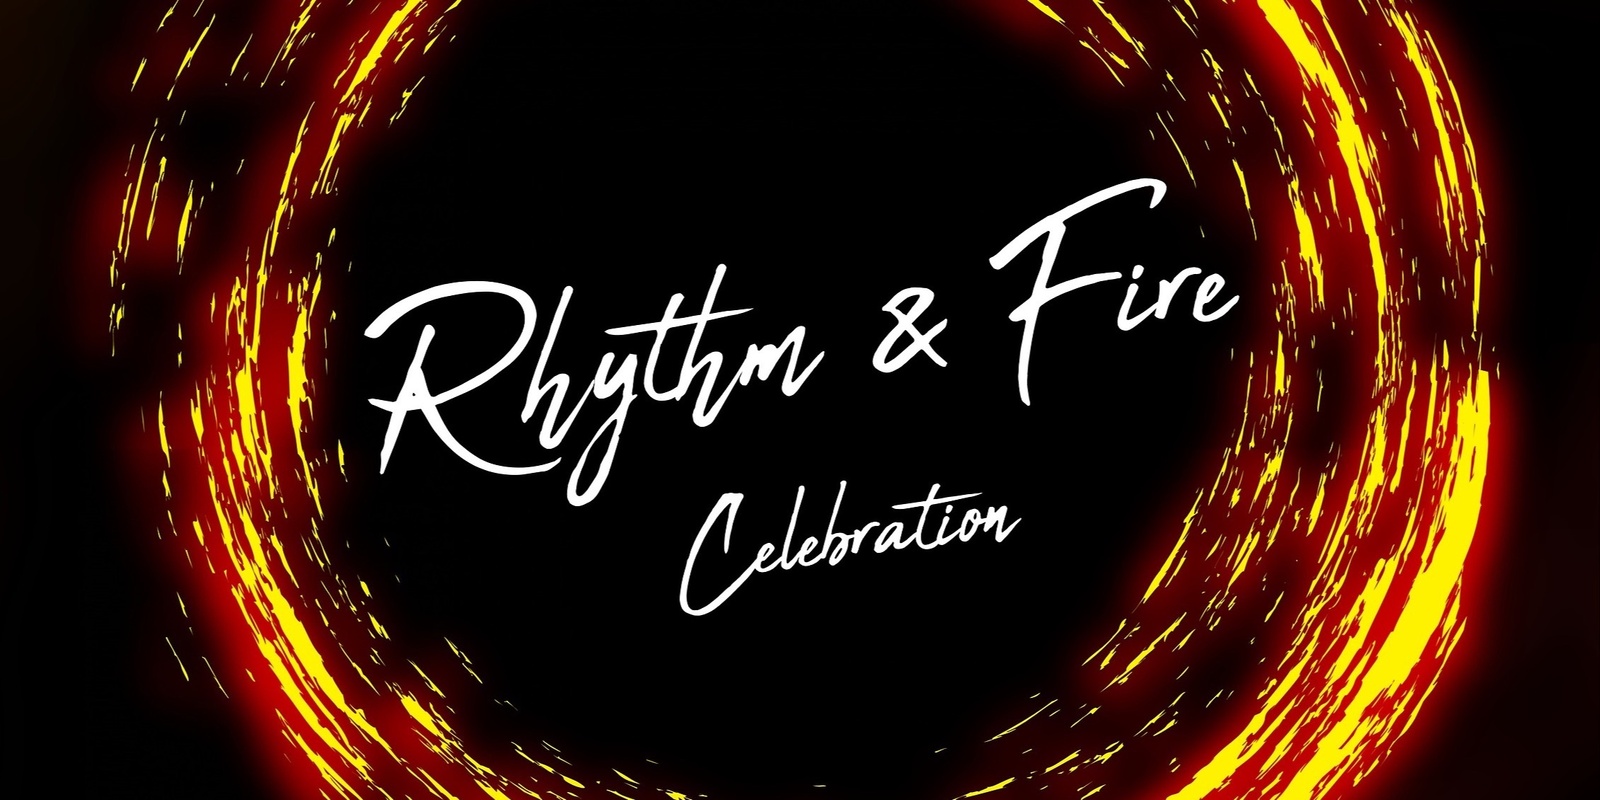 Banner image for Rhythm & Fire v2.0